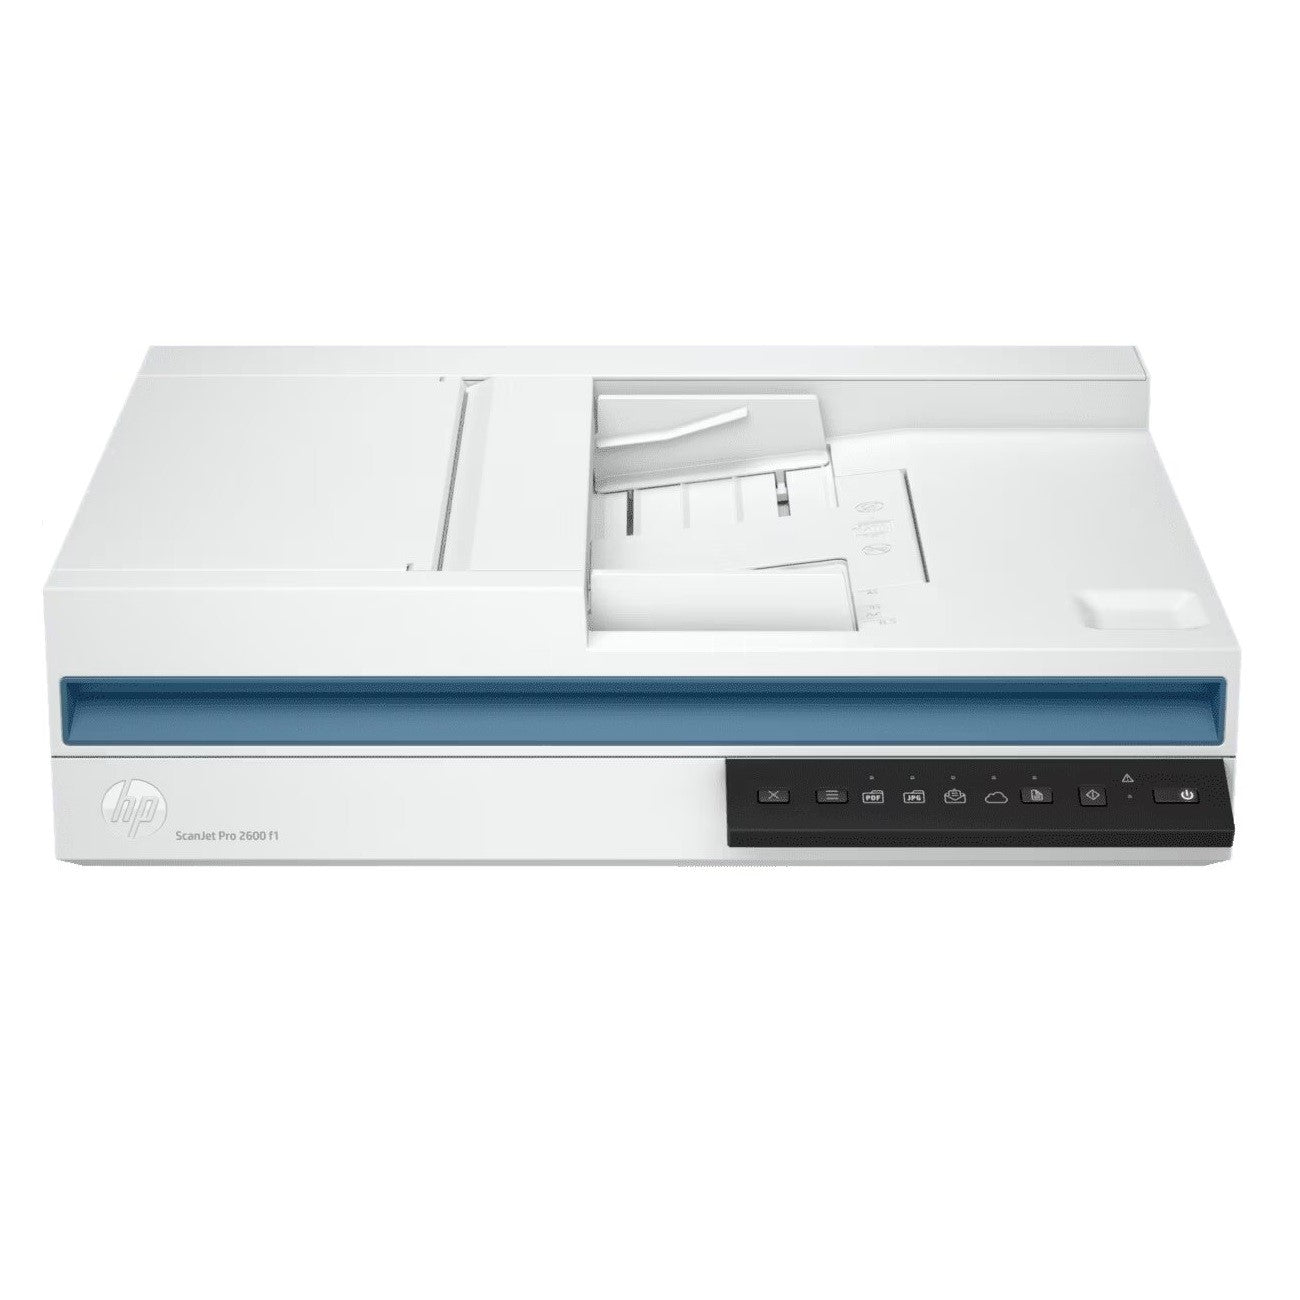 Escáner HP ScanJet Pro 2600 f1, USB